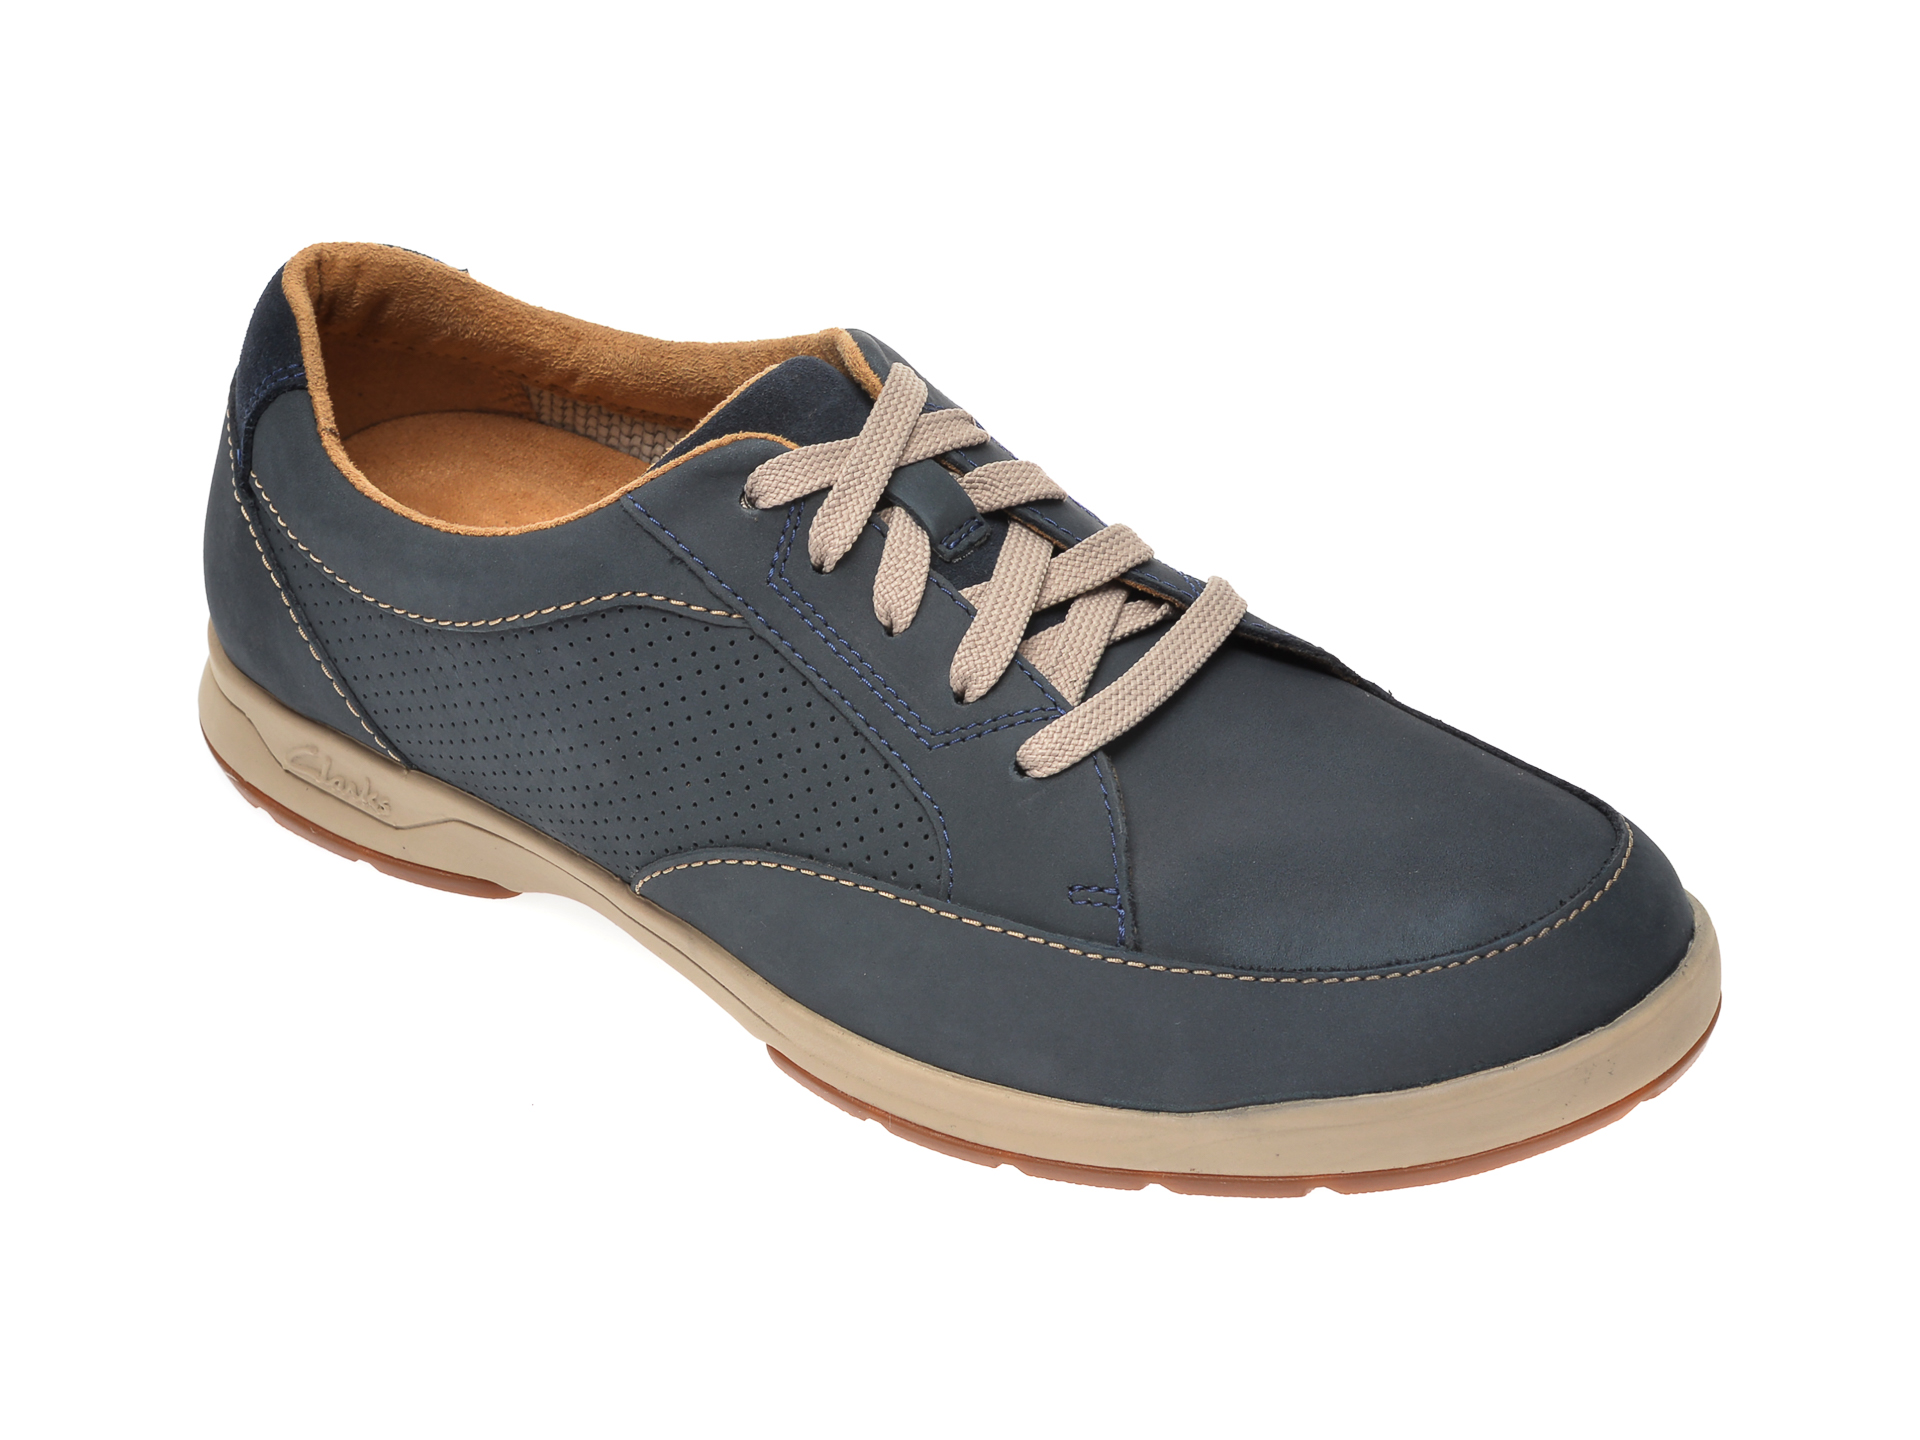 Pantofi CLARKS bleumarin, Stafford Park5, din nabuc